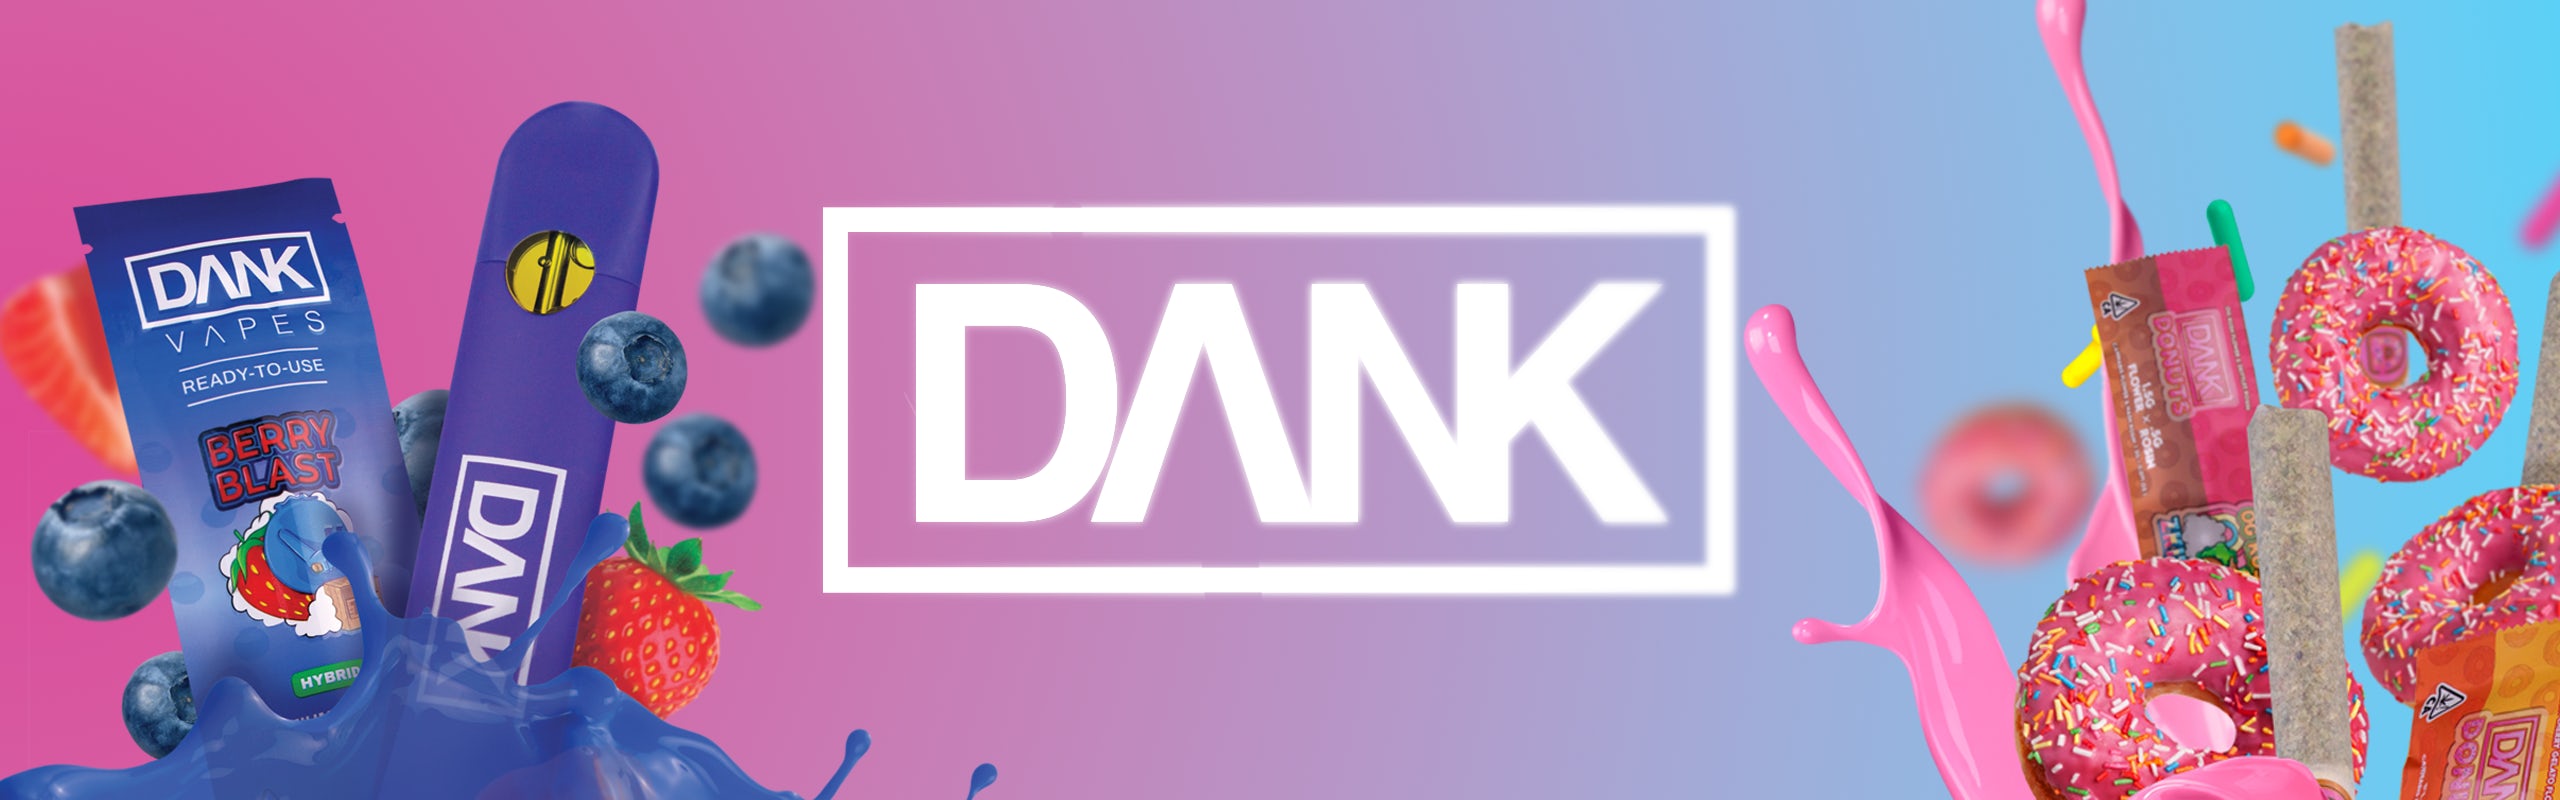 DANK banner